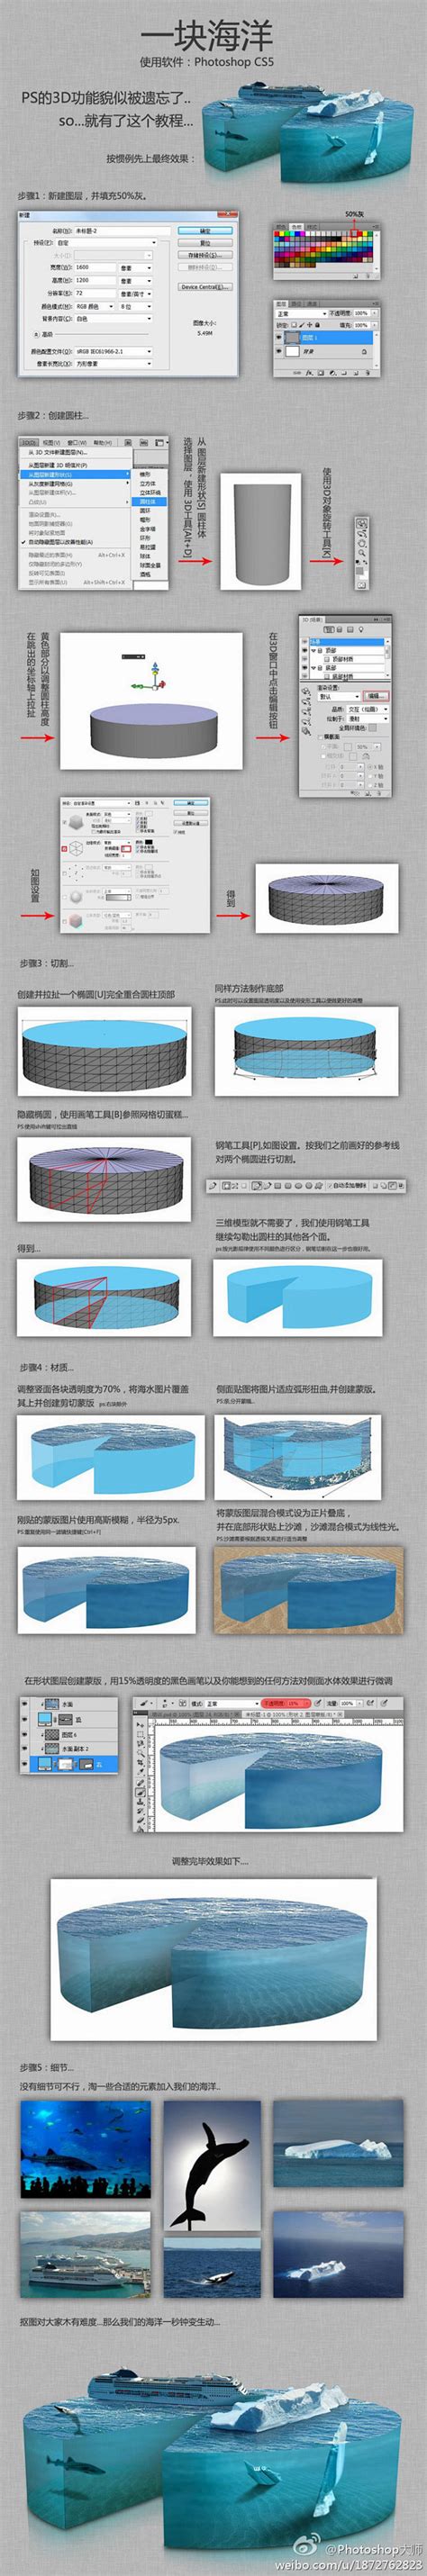 3d立体建筑素材-3d立体建筑模板-3d立体建筑图片免费下载-设图网